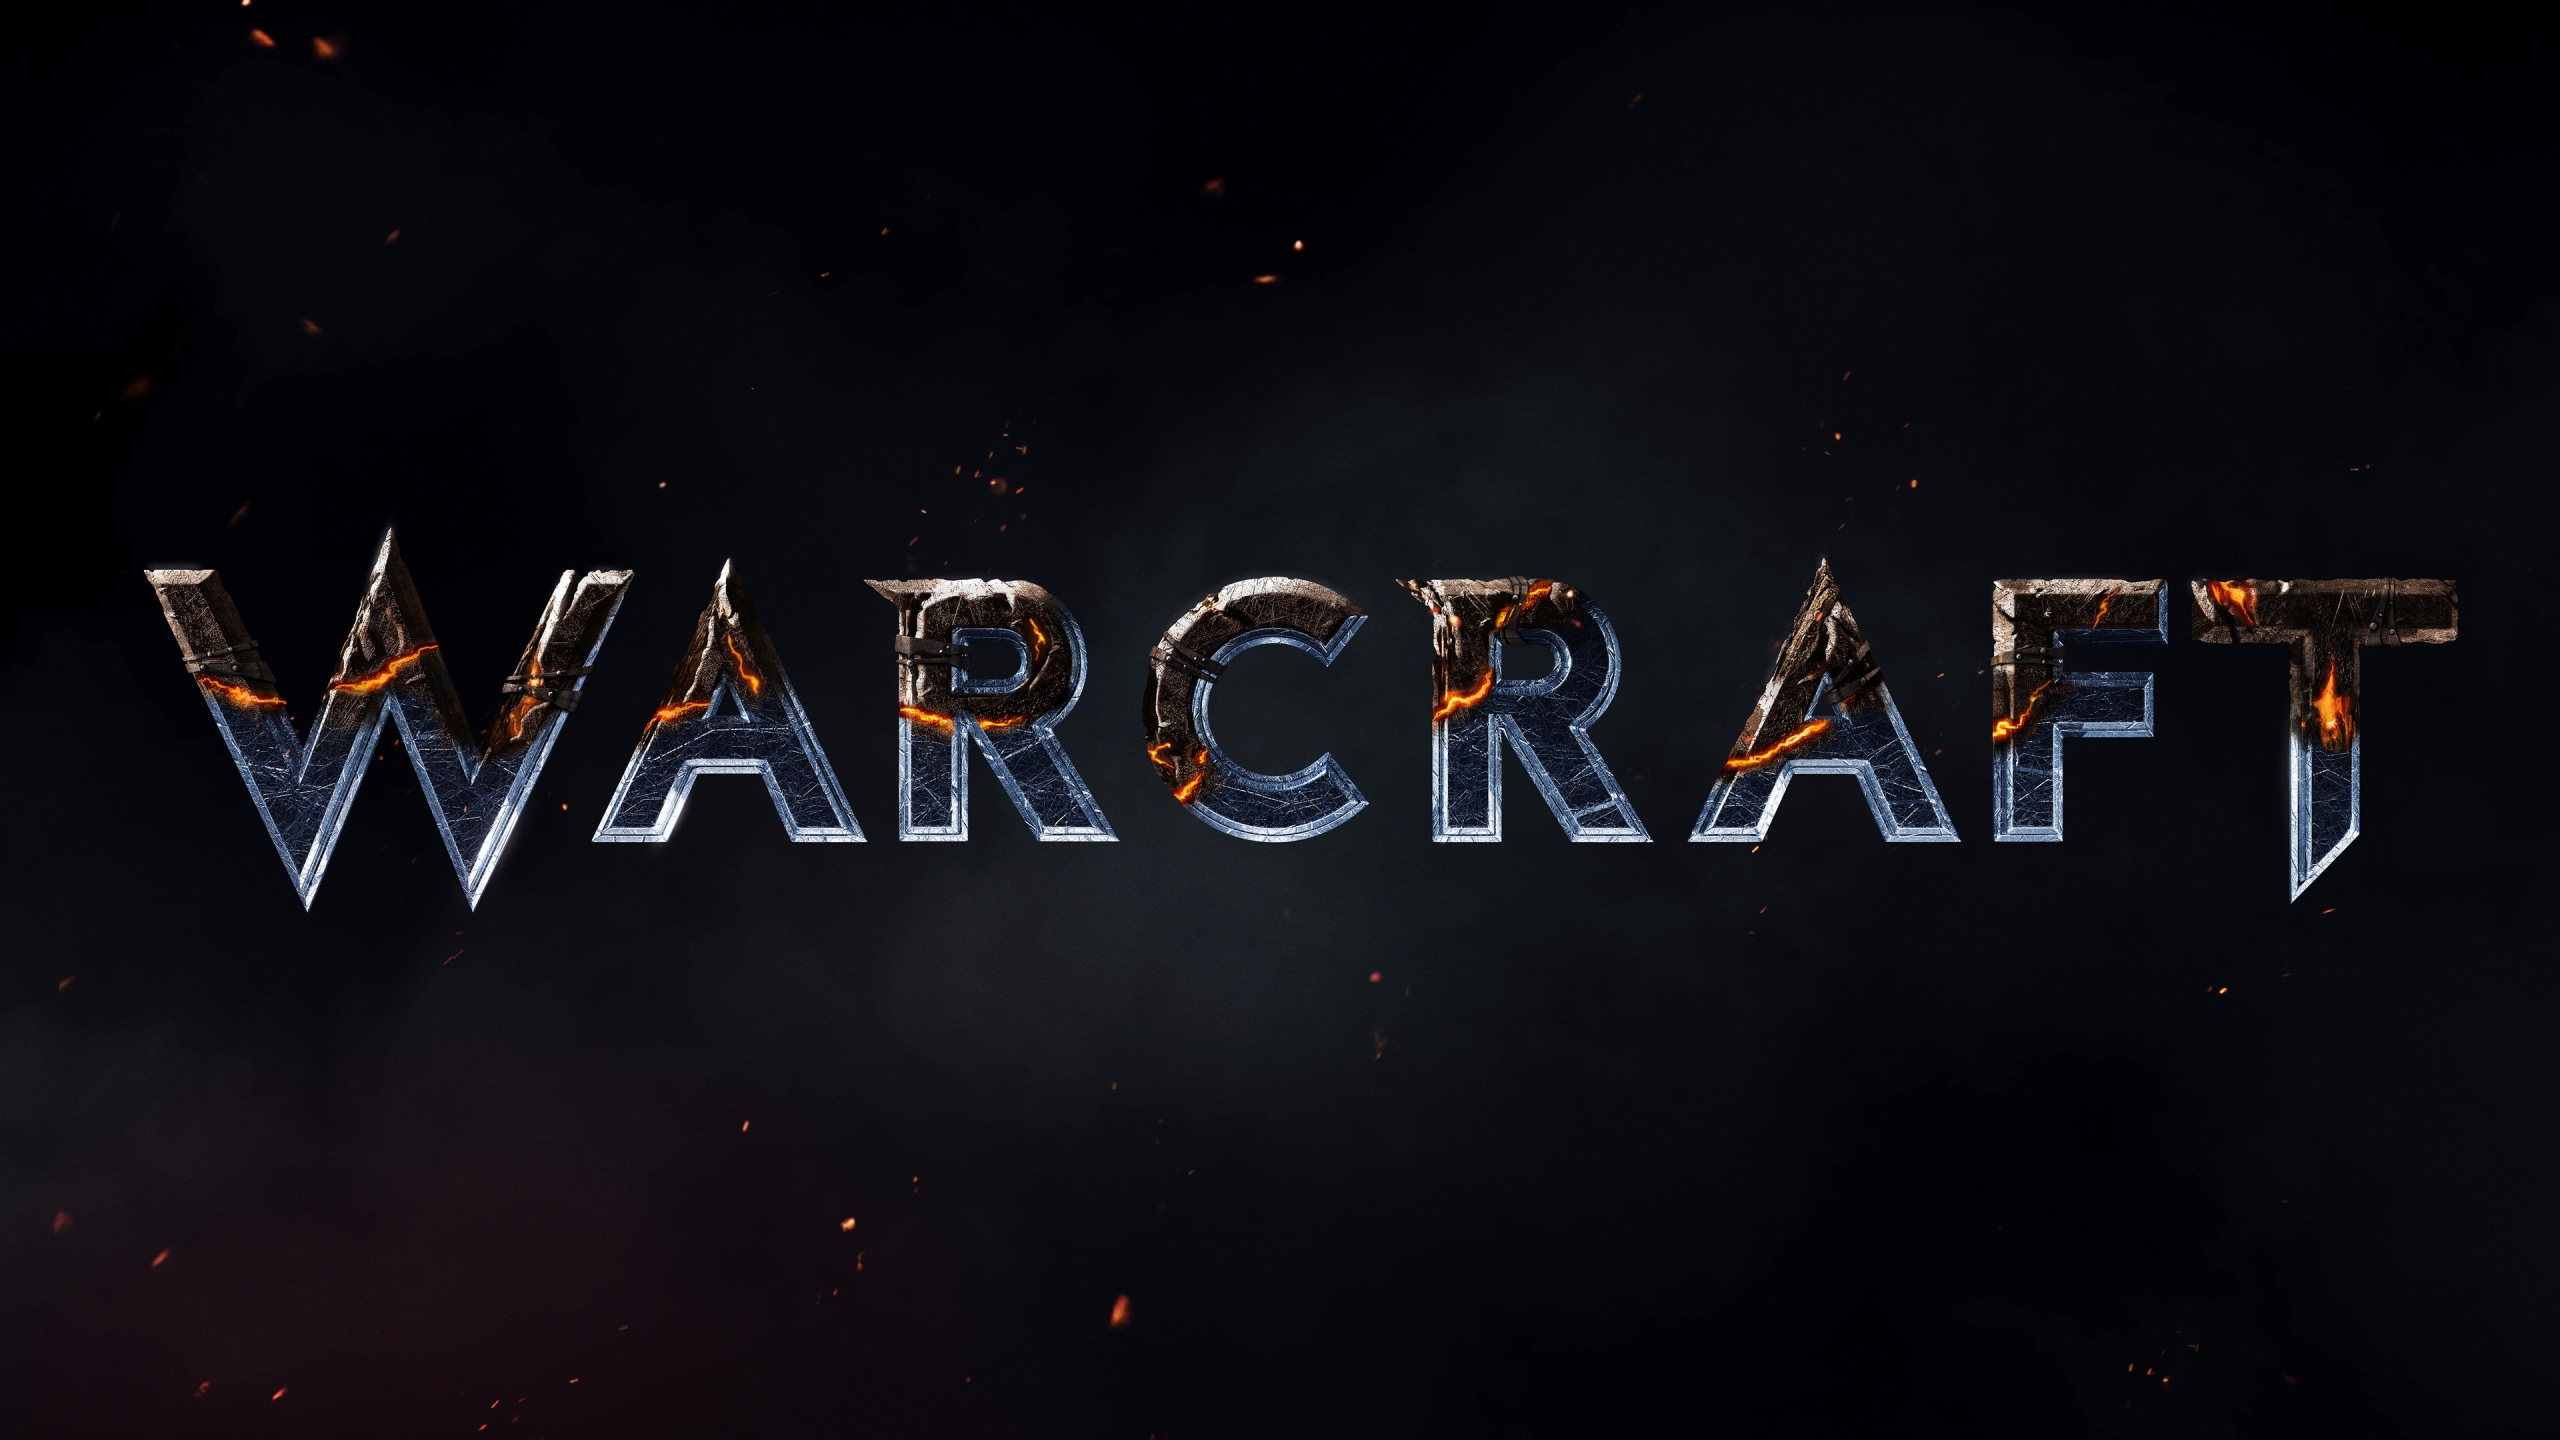 Warcraft Movie 2016 for 2560x1440 HDTV resolution